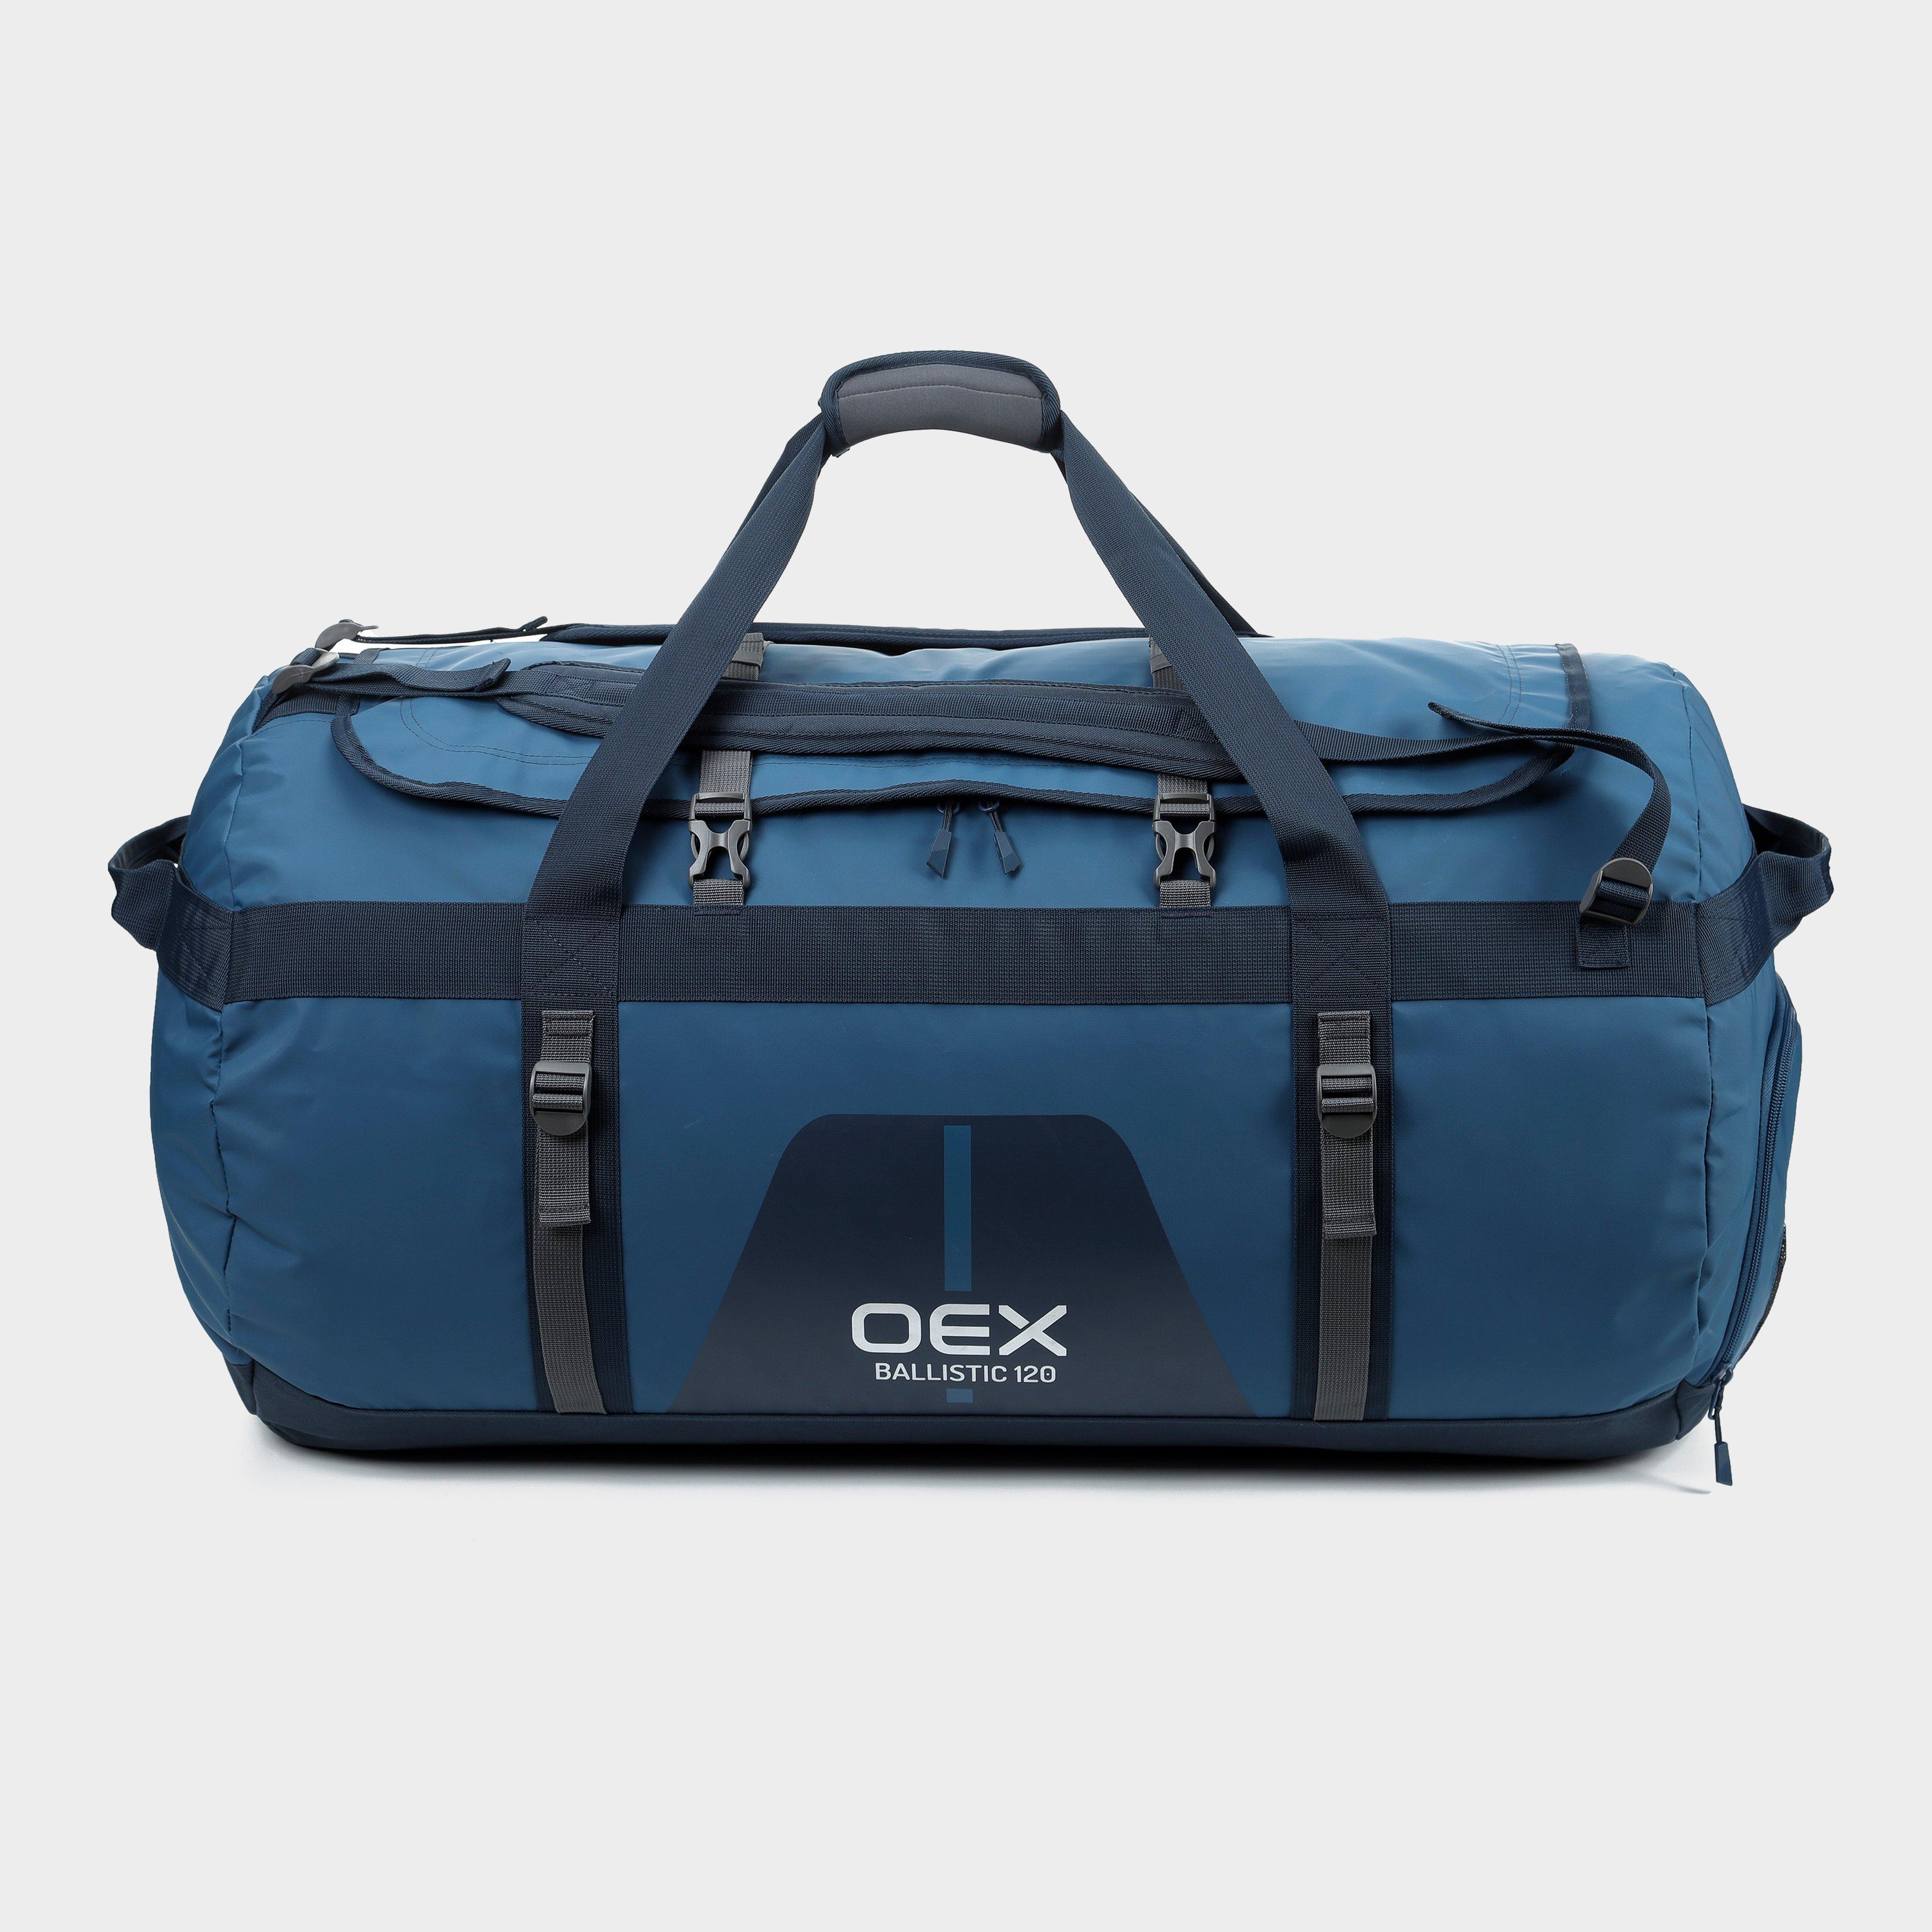 OEX Oex Ballistic 120L Cargo Bag - Navy, Navy